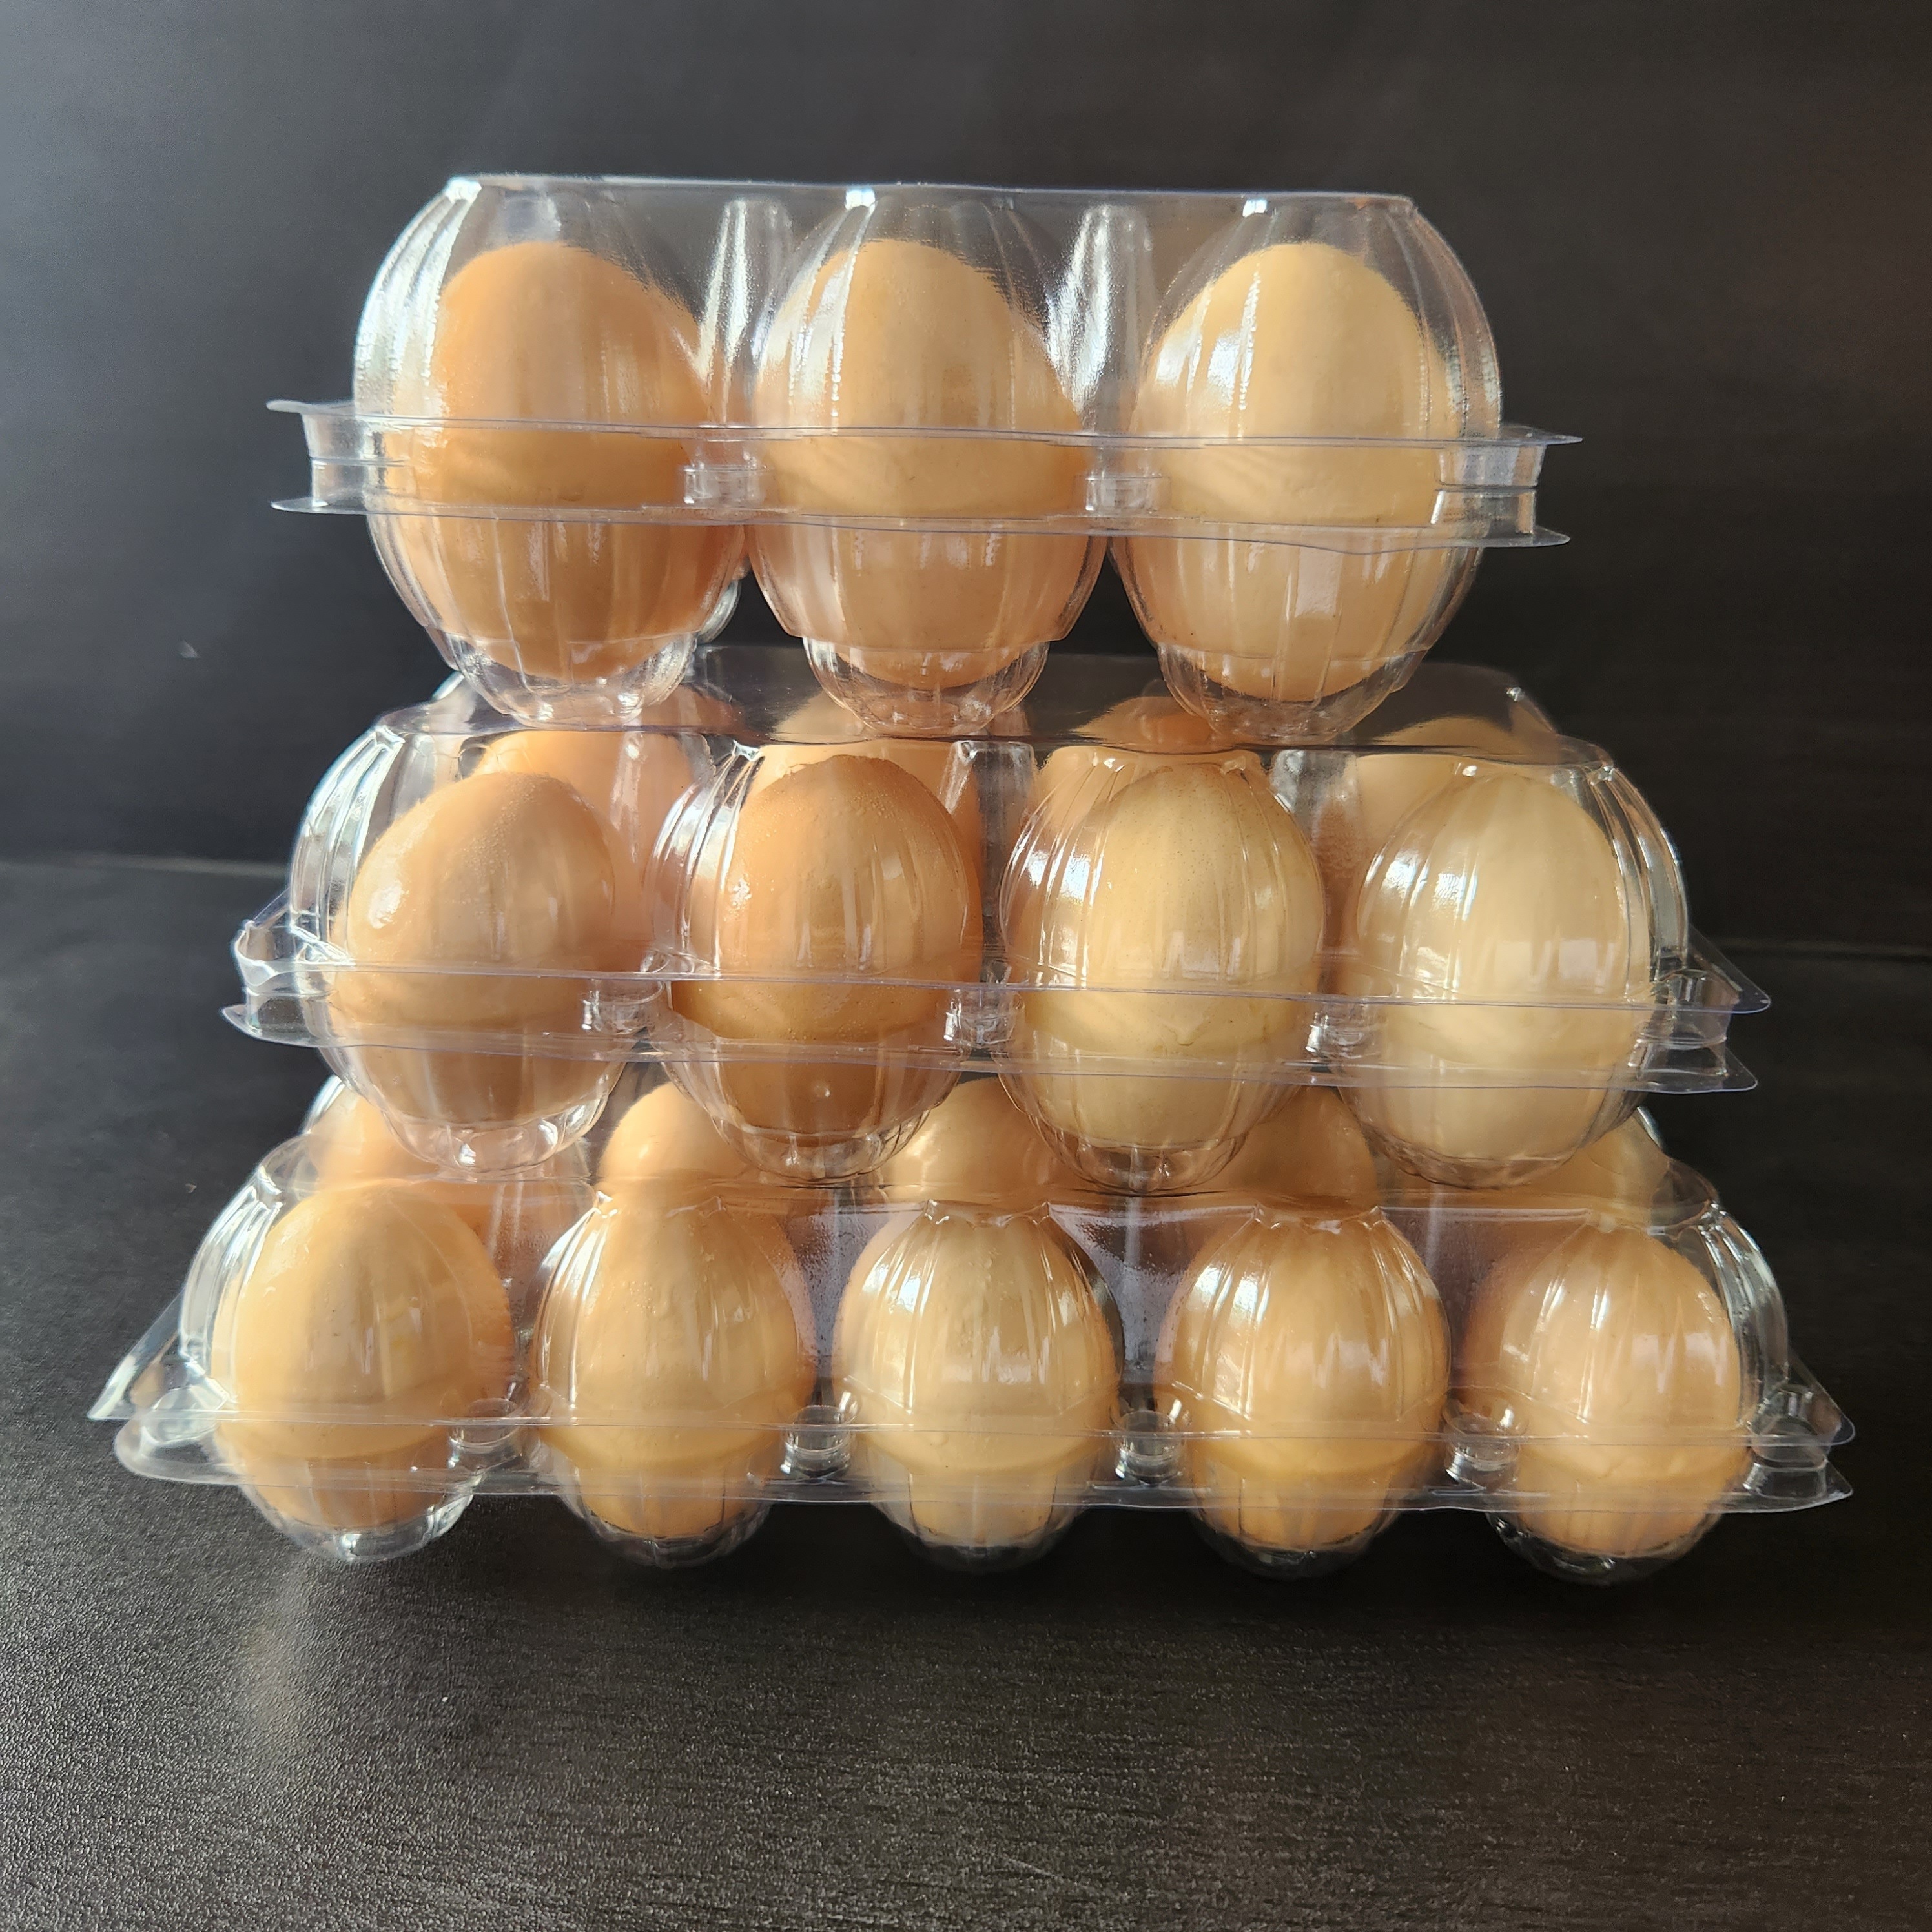 100PCS Egg Cartons Cheap Bulk Empty Plastic Chicken Egg Carton